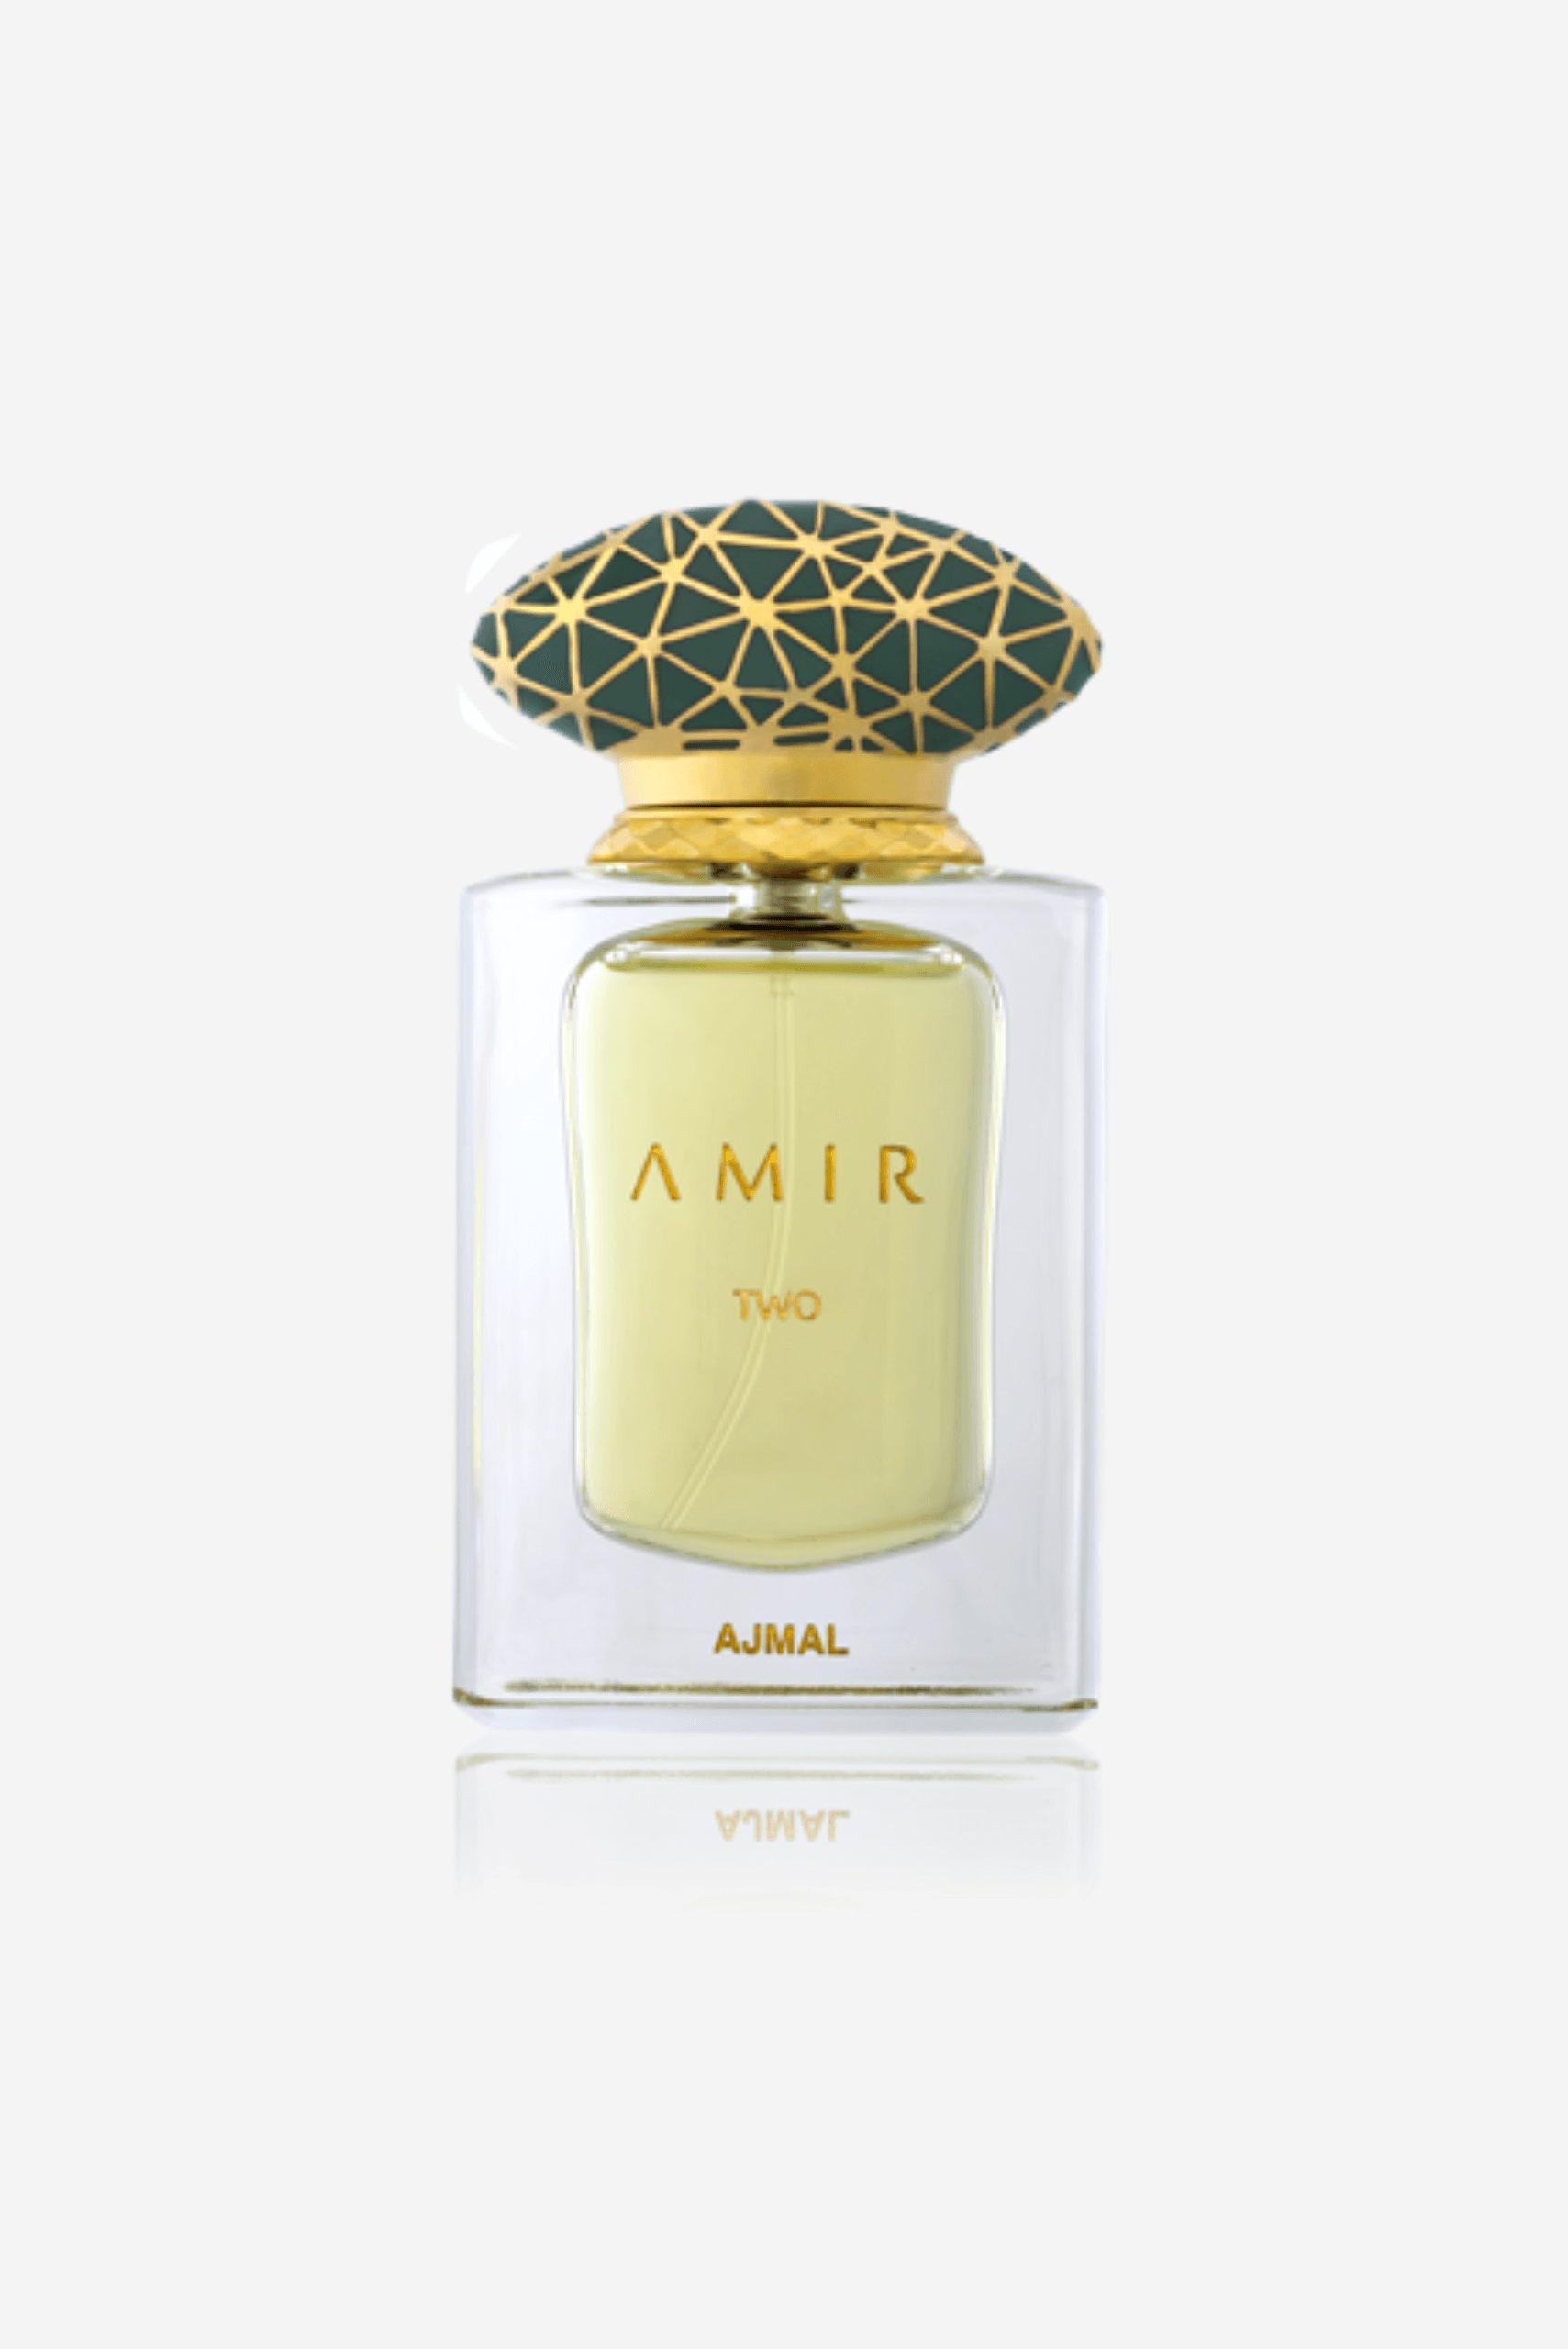 Amir Two - Ajmal - Muslim Lifestyle Store